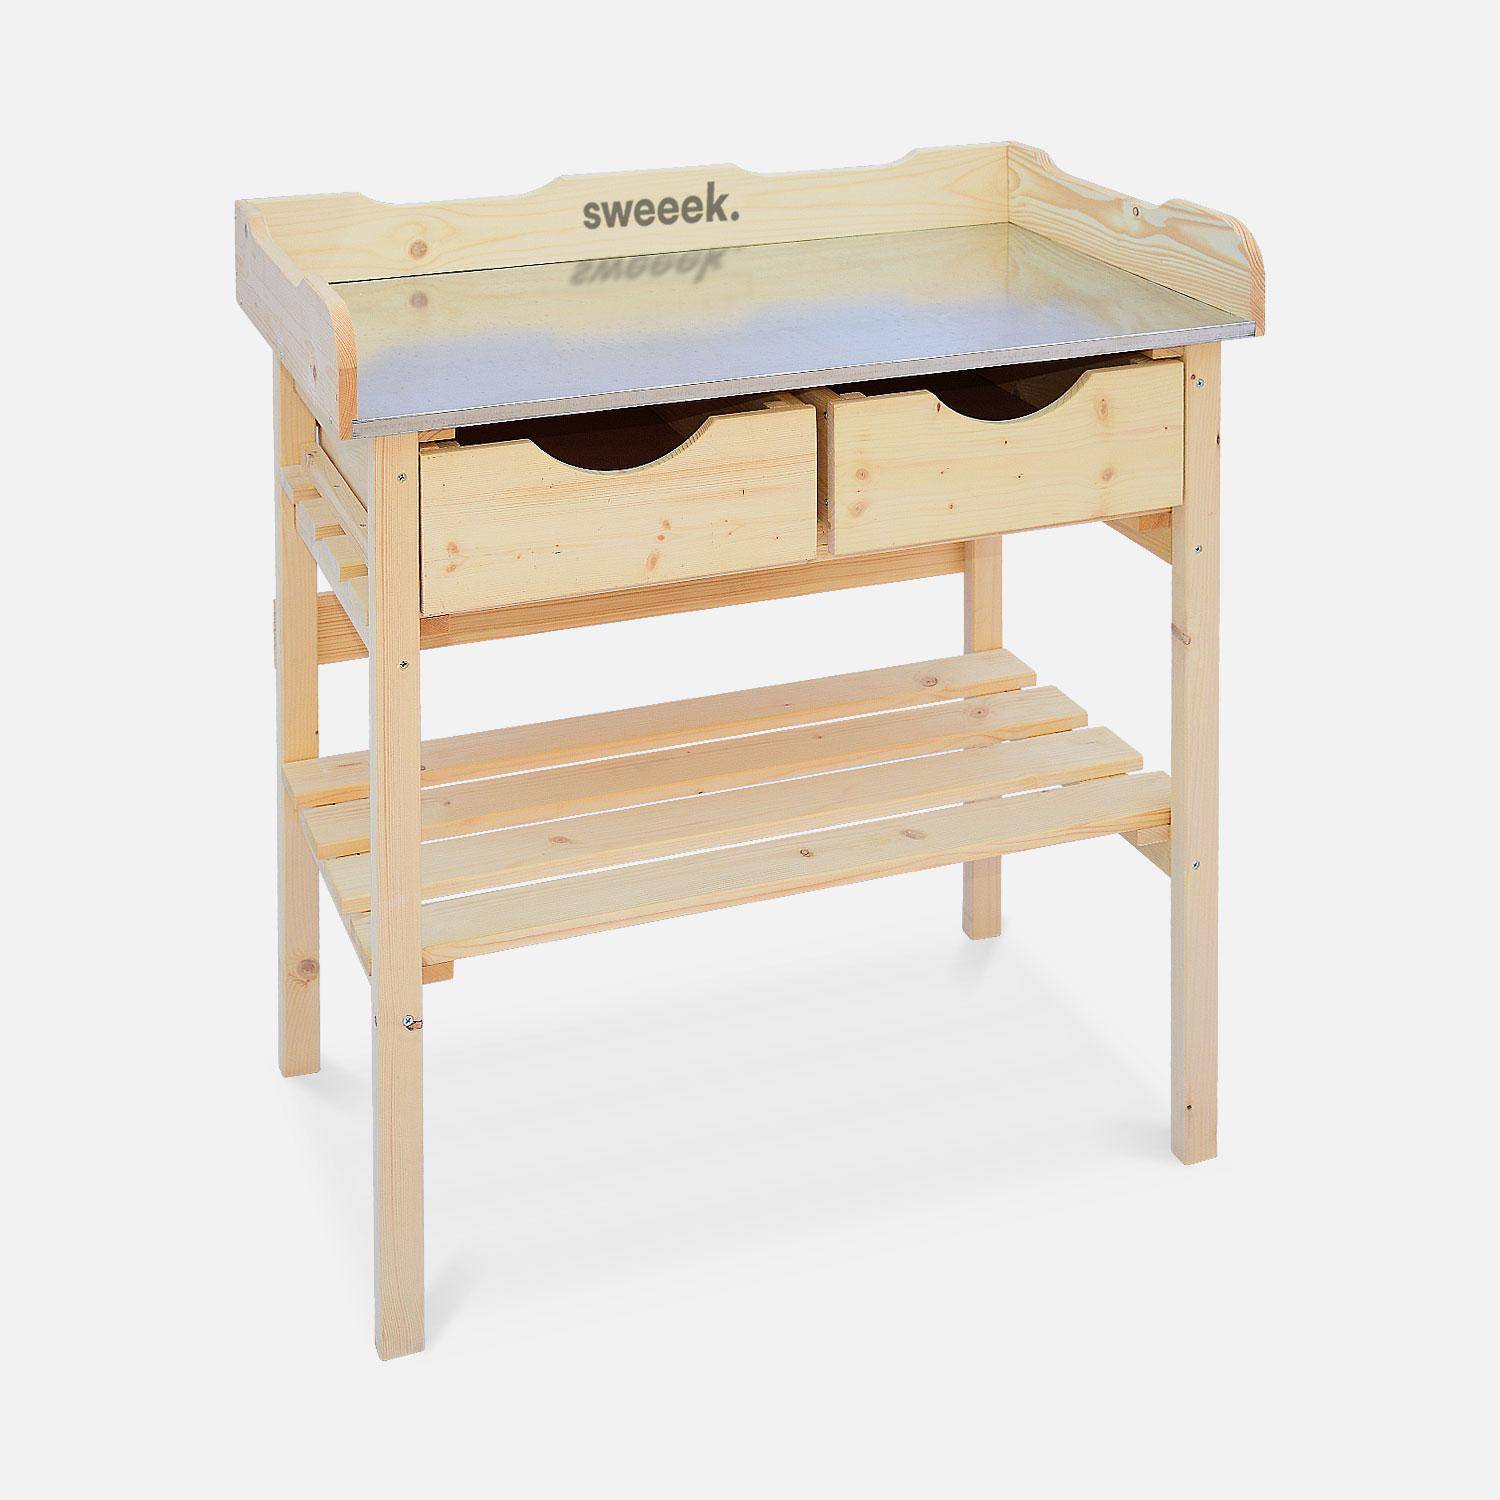 Wood Garden Workbench - PETUNIA - Gardening table with 2 drawers, potting table,sweeek,Photo1